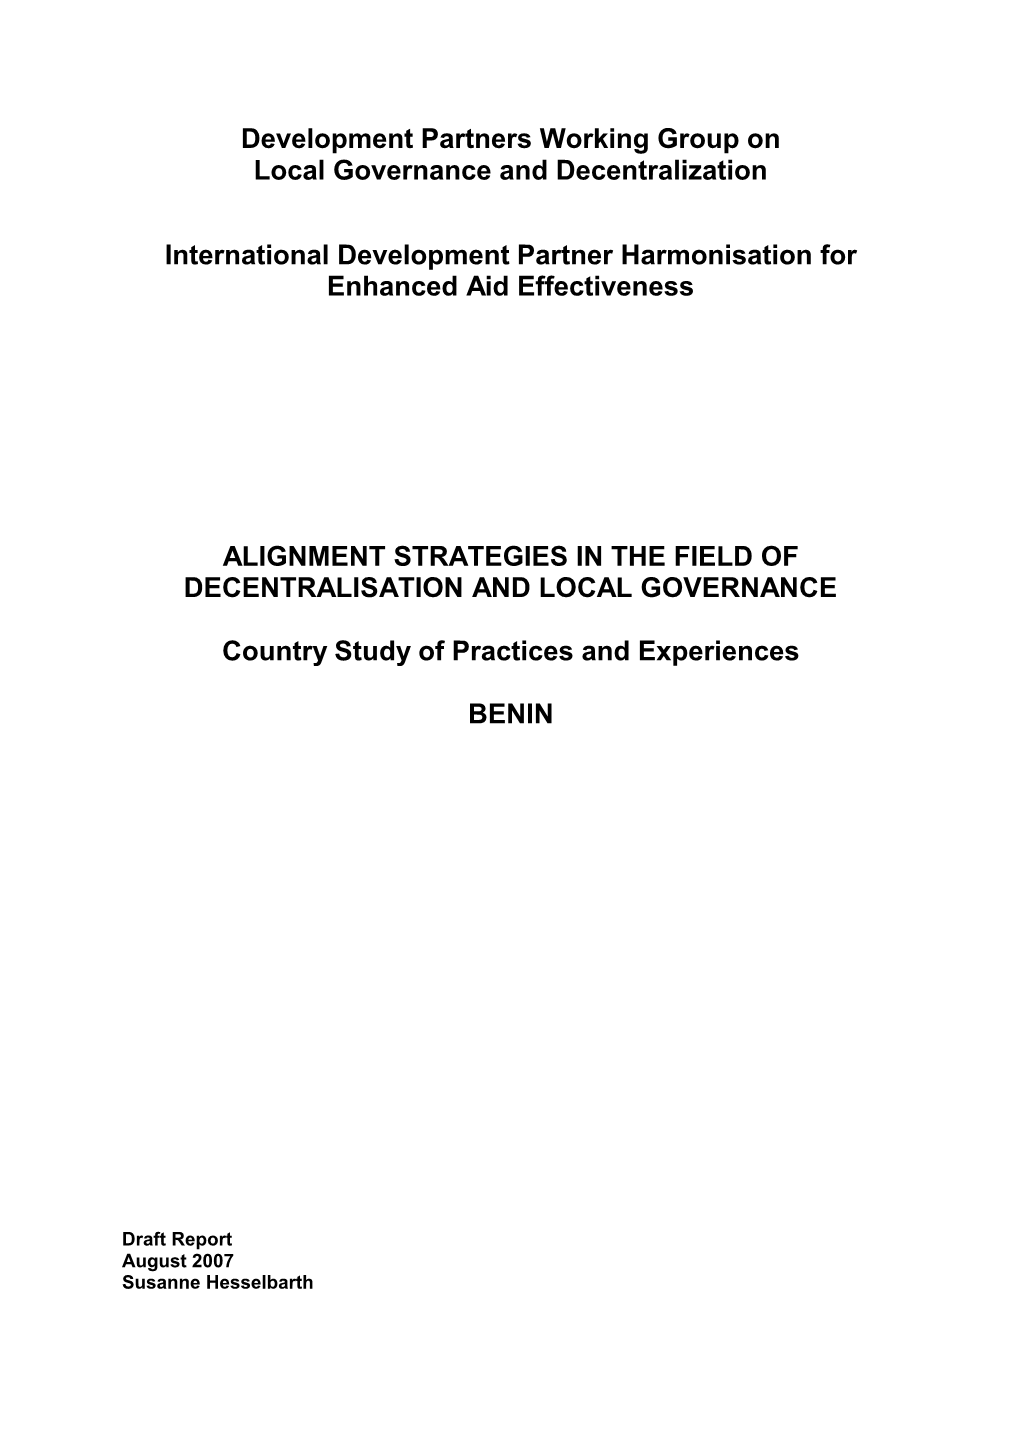 Country Study Benin Aug 07.TMP